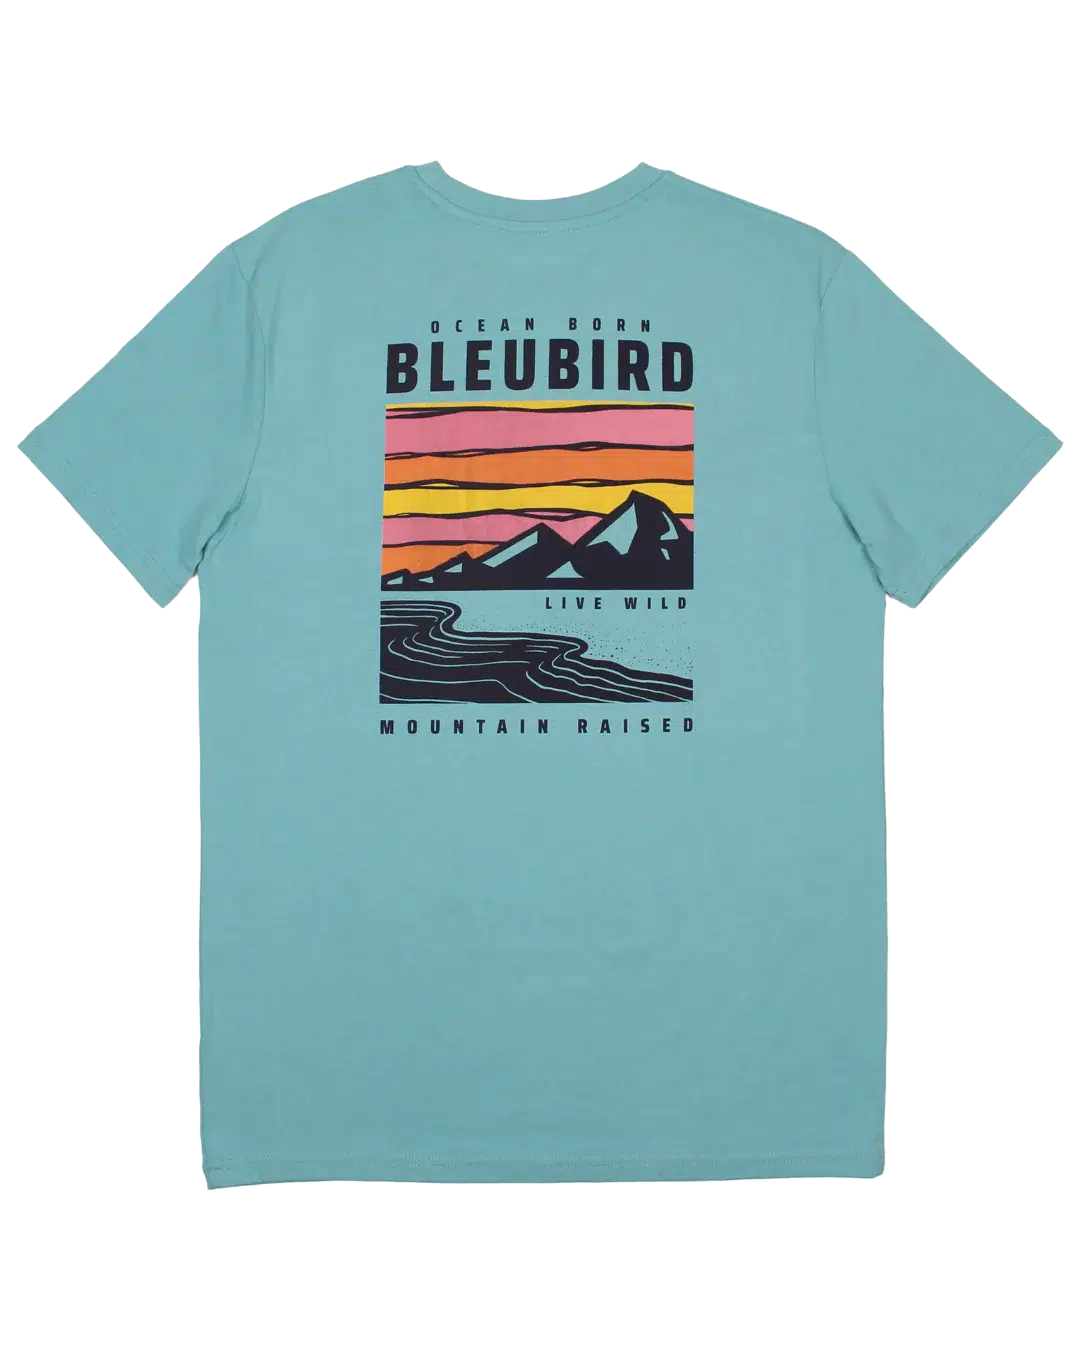 Bleubird Wild Tee in Teal